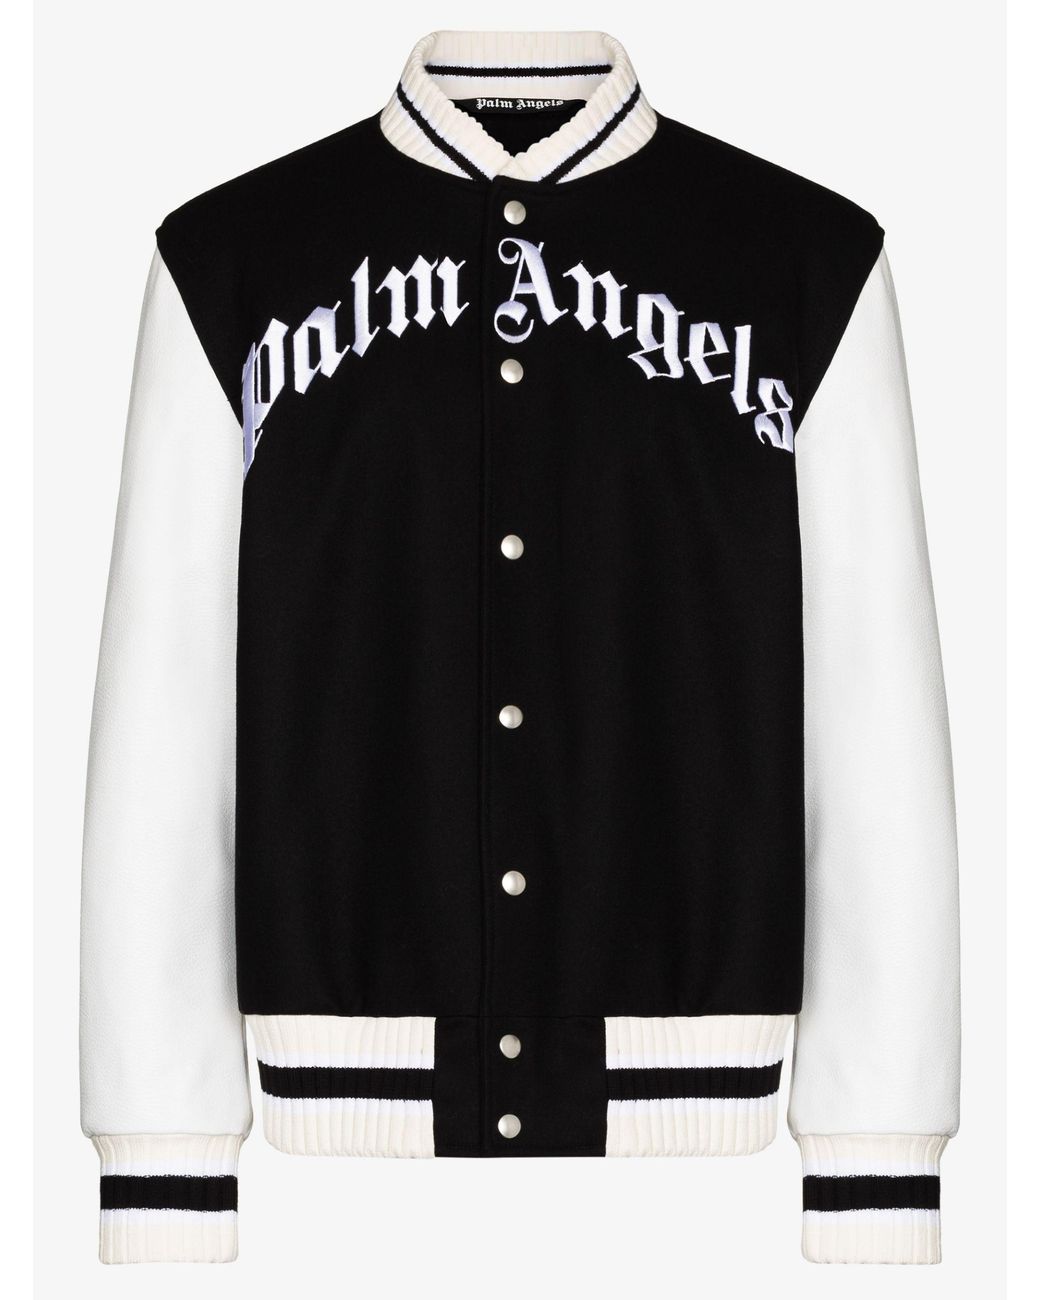 Palm Angels X Browns 50 Bear Appliqué Varsity Jacket in Black for Men